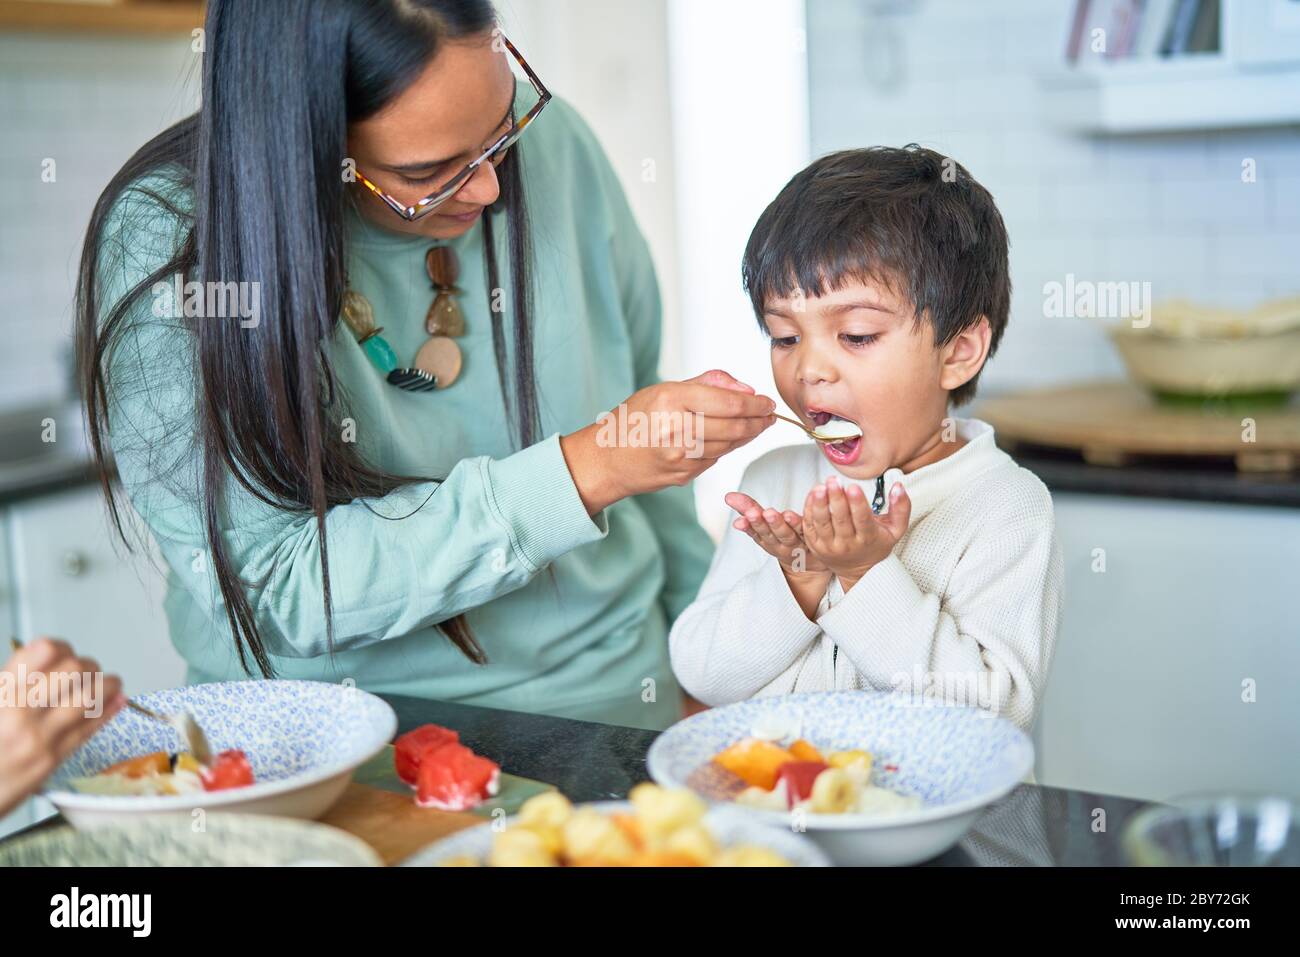 Mother feeding son in kitchen Stock Photo